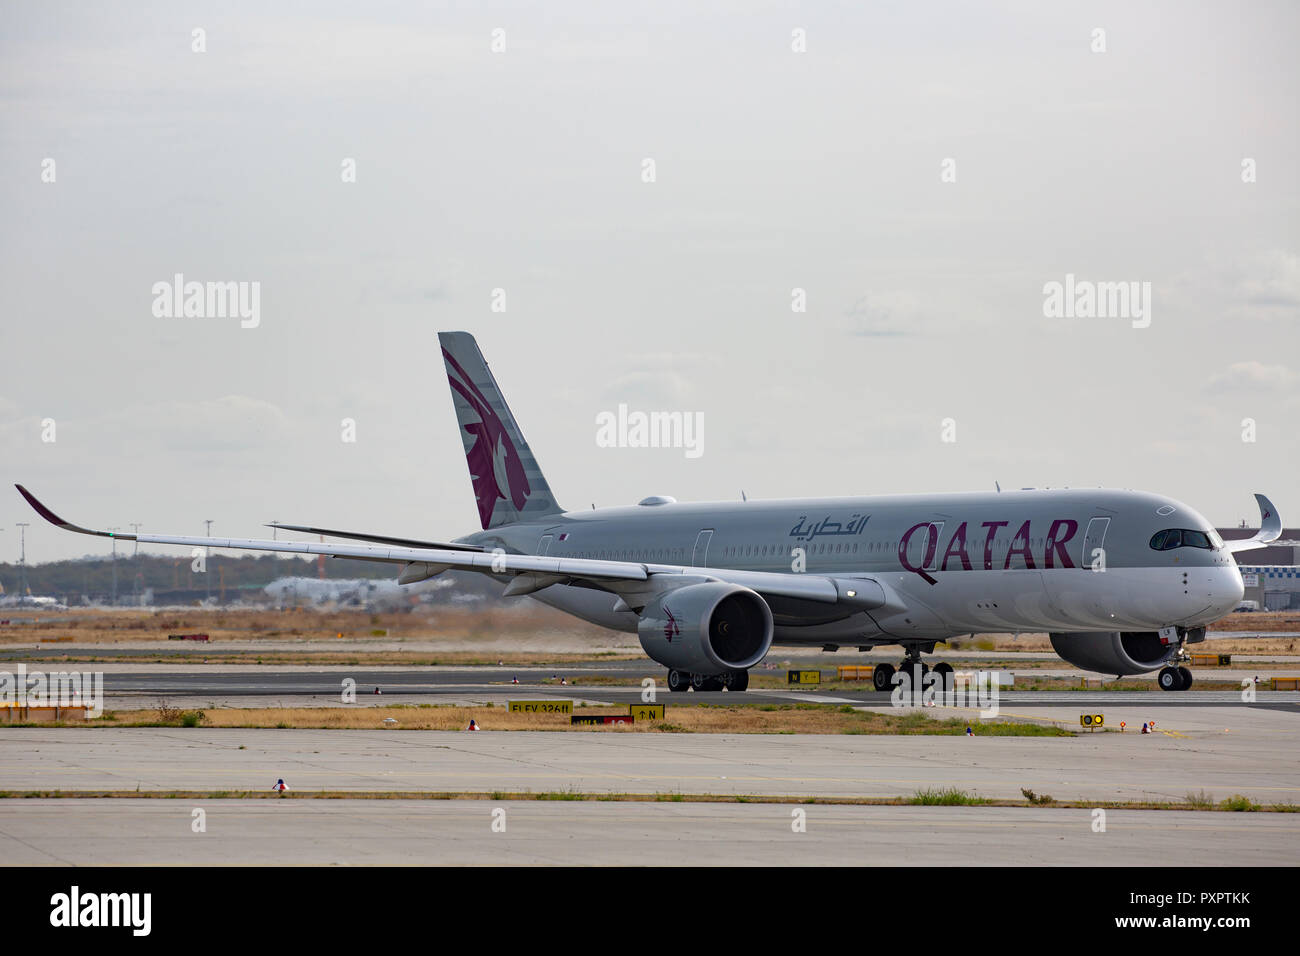 A7-ALM, Airbus A350-941 der Qatar Airways am Flughafen Frankfurt am Main (FRA), 23.09.2018 Stock Photo